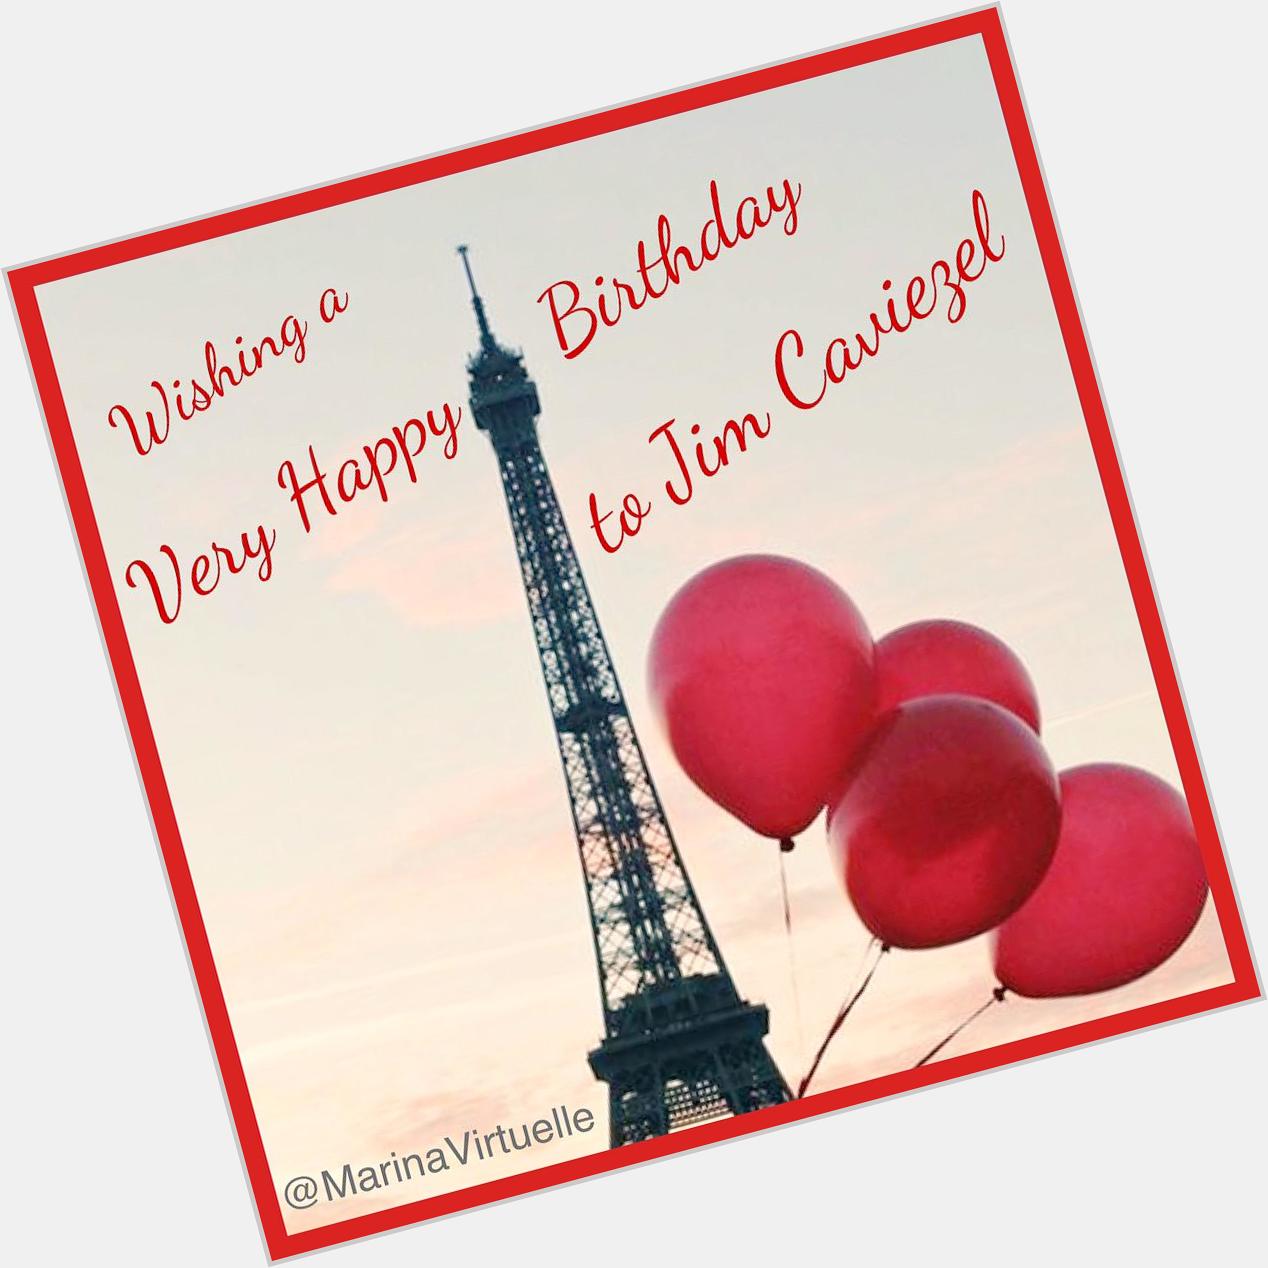 Wishing to Jim Caviezel the happiest birthday! 

Many happy returns!! 